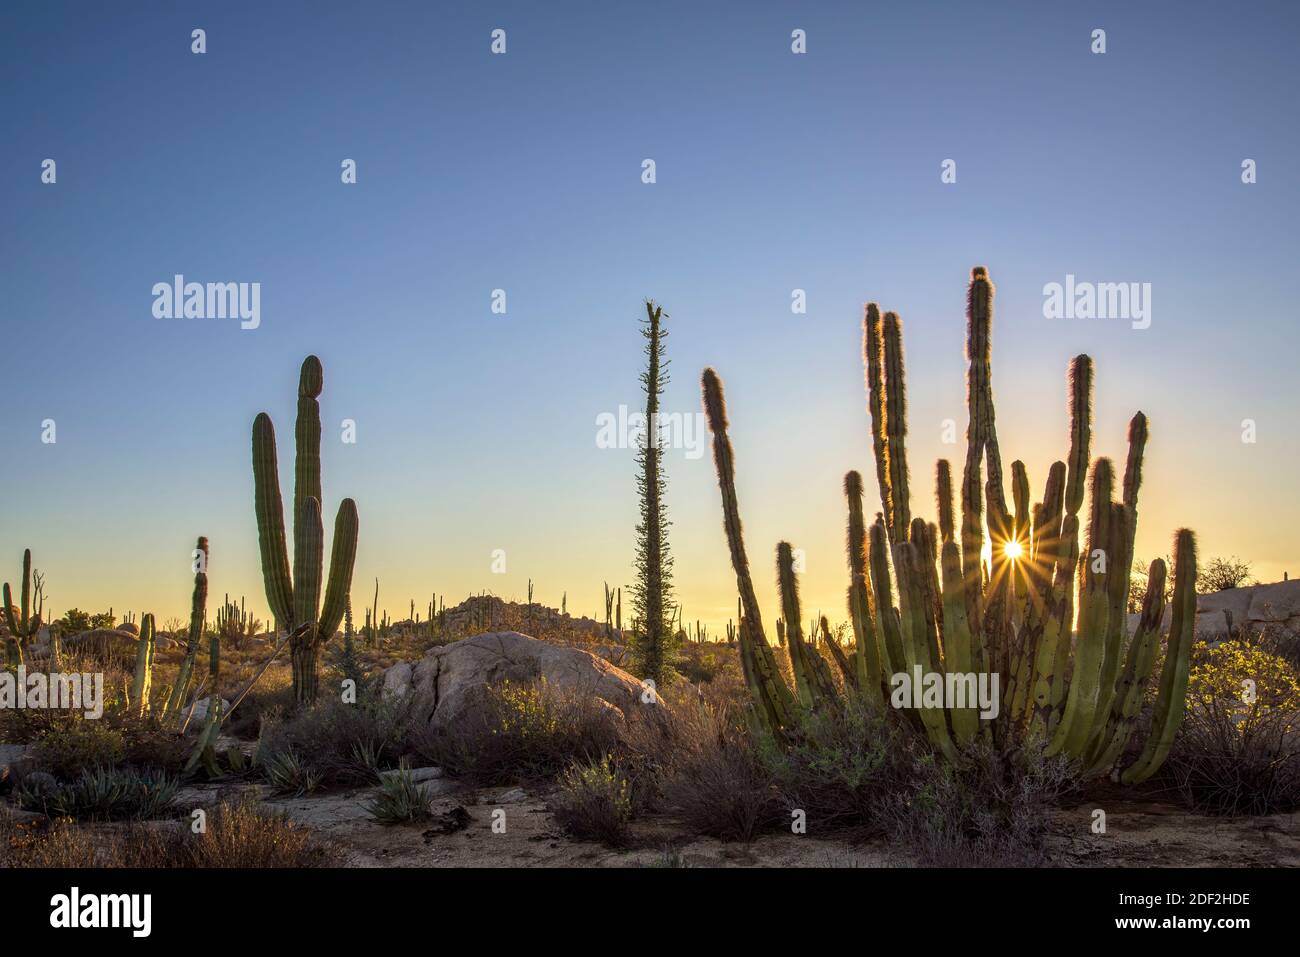 Kakteen und Boojum-Bäume in Valle de los Cirios, Catavina Desert, Baja California, Mexiko. Stockfoto